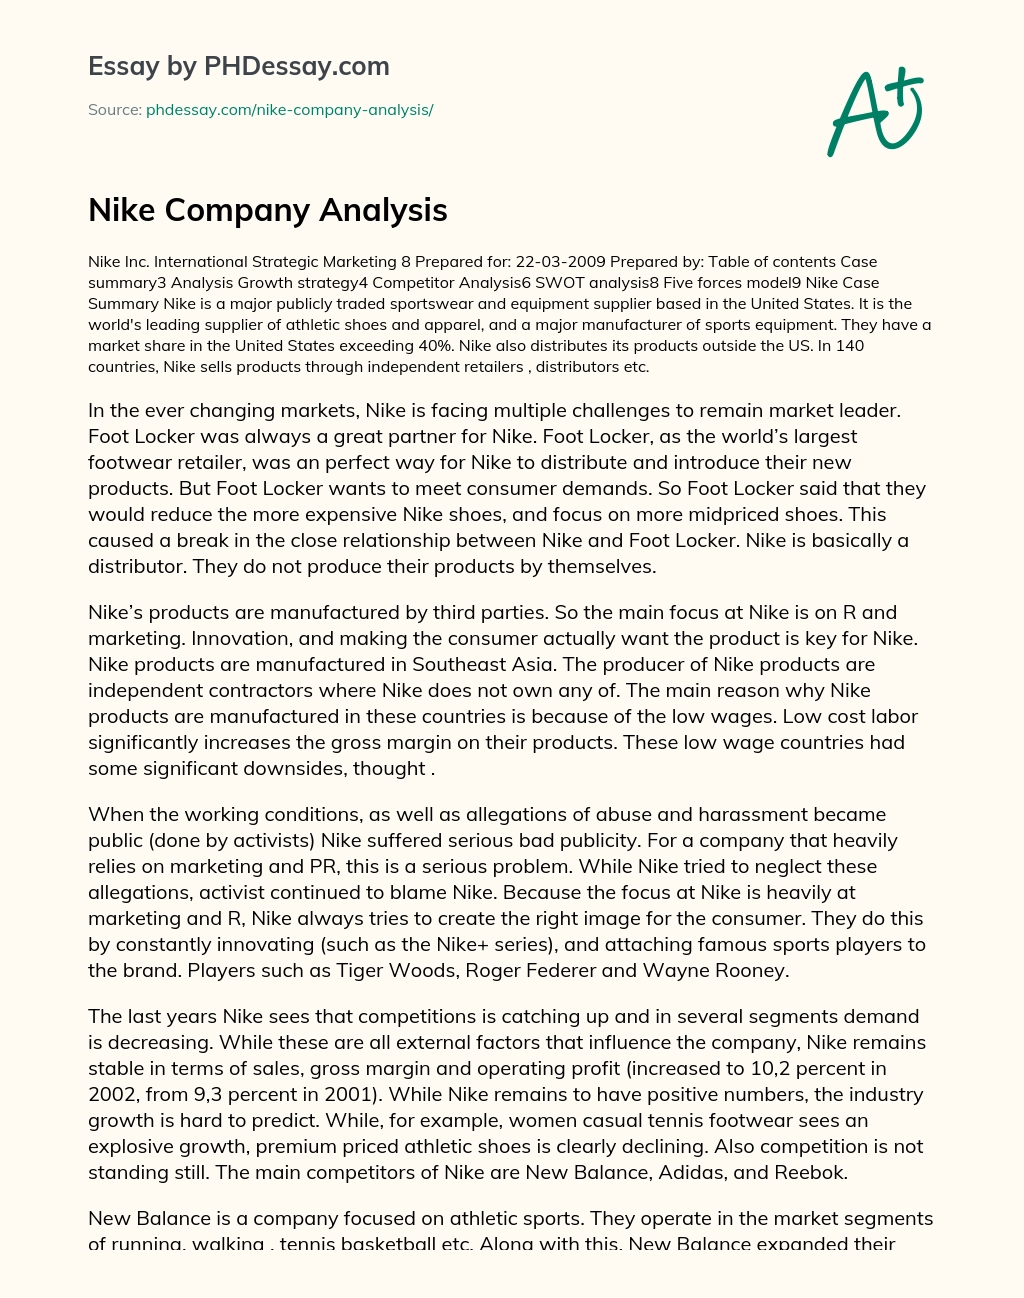 Nike Company Analysis essay